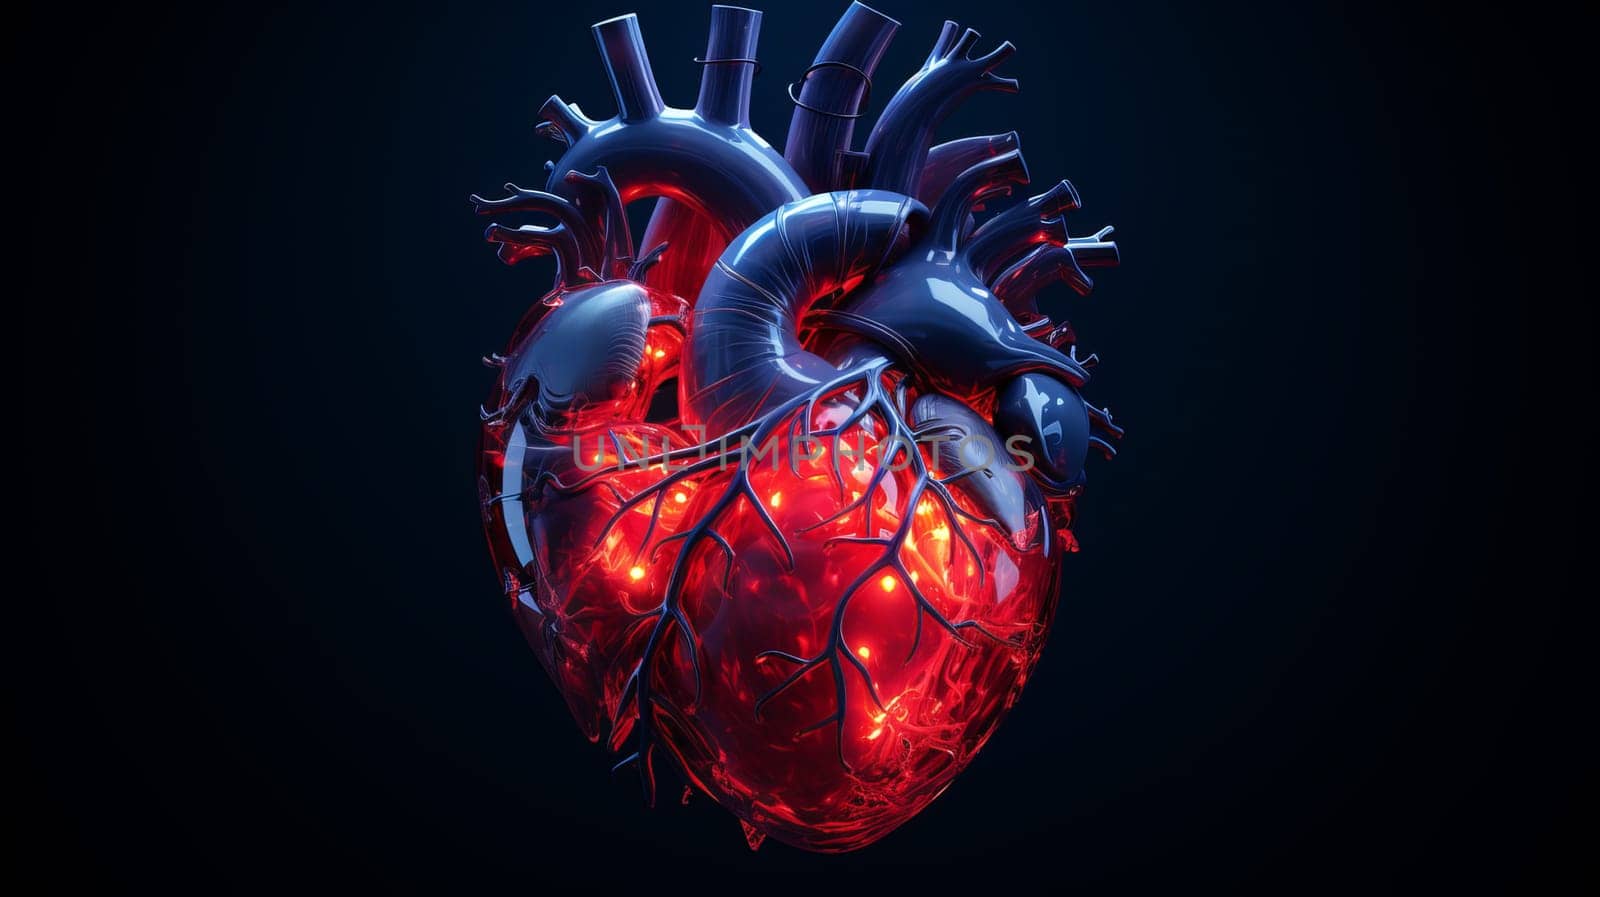 Human heart model,concept of cardiology, health care, human organ transplant. by Alla_Yurtayeva